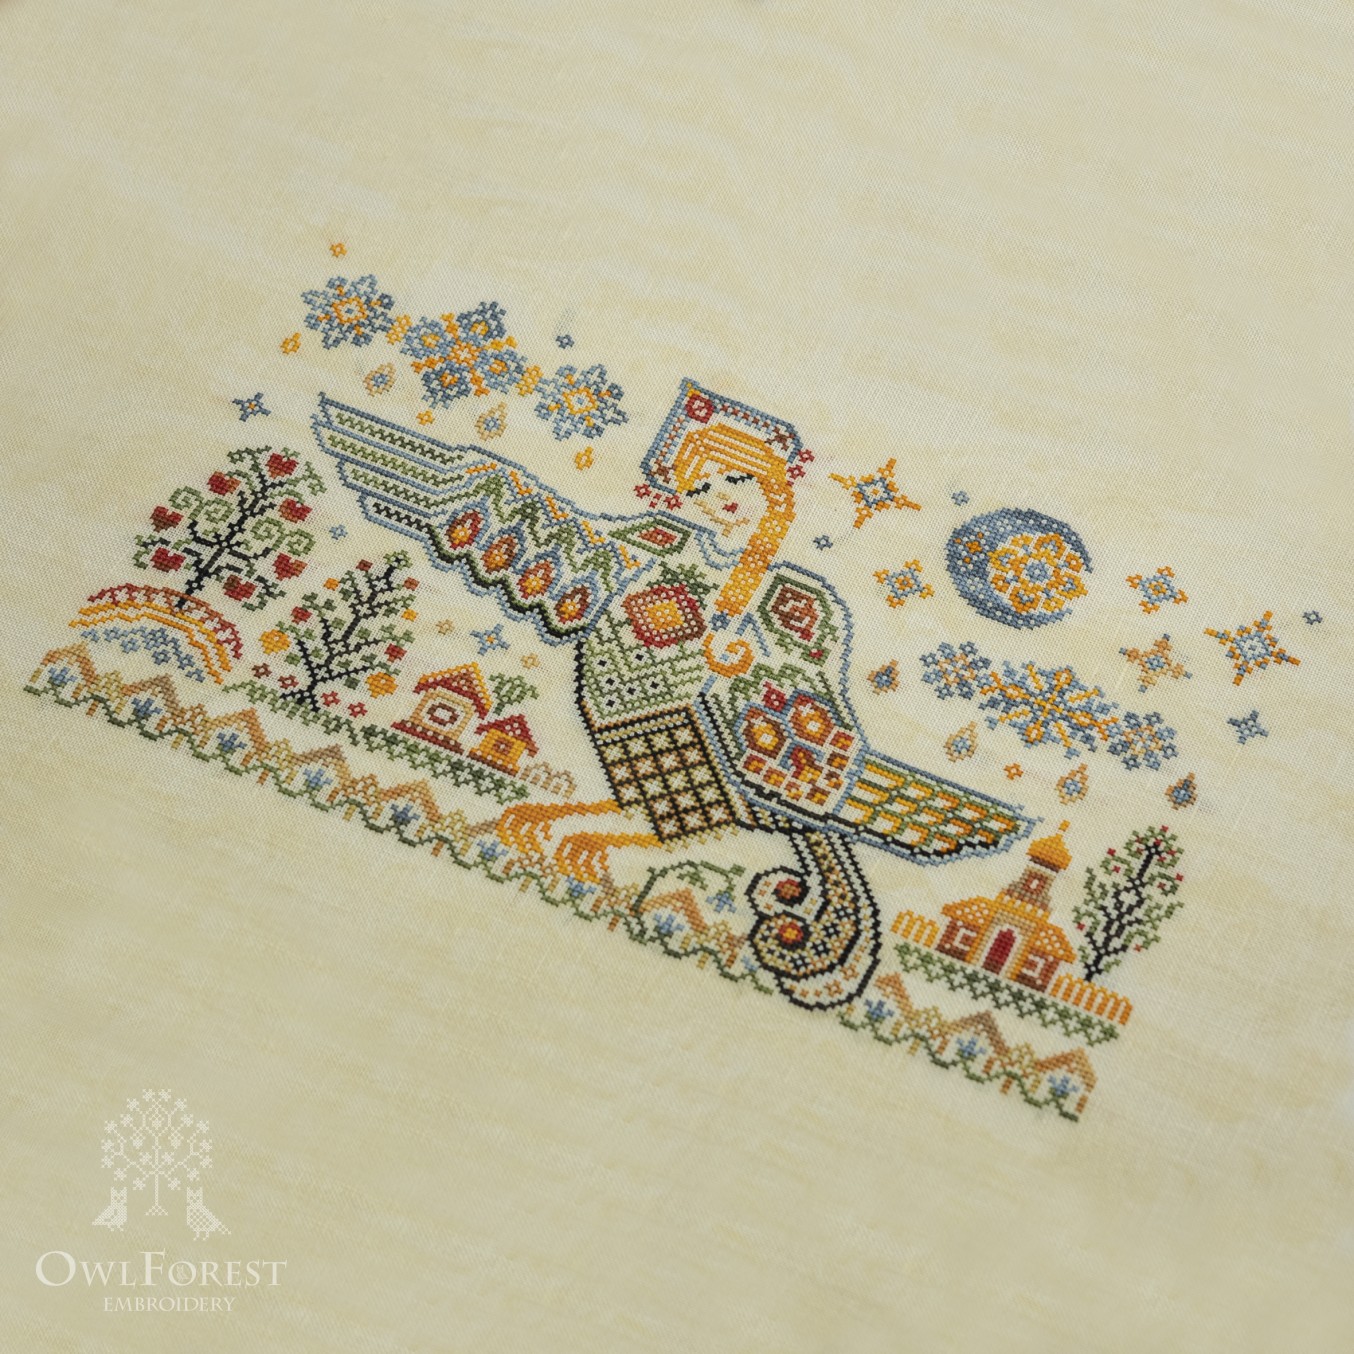 Owlforest Embroidery змей Горыныч